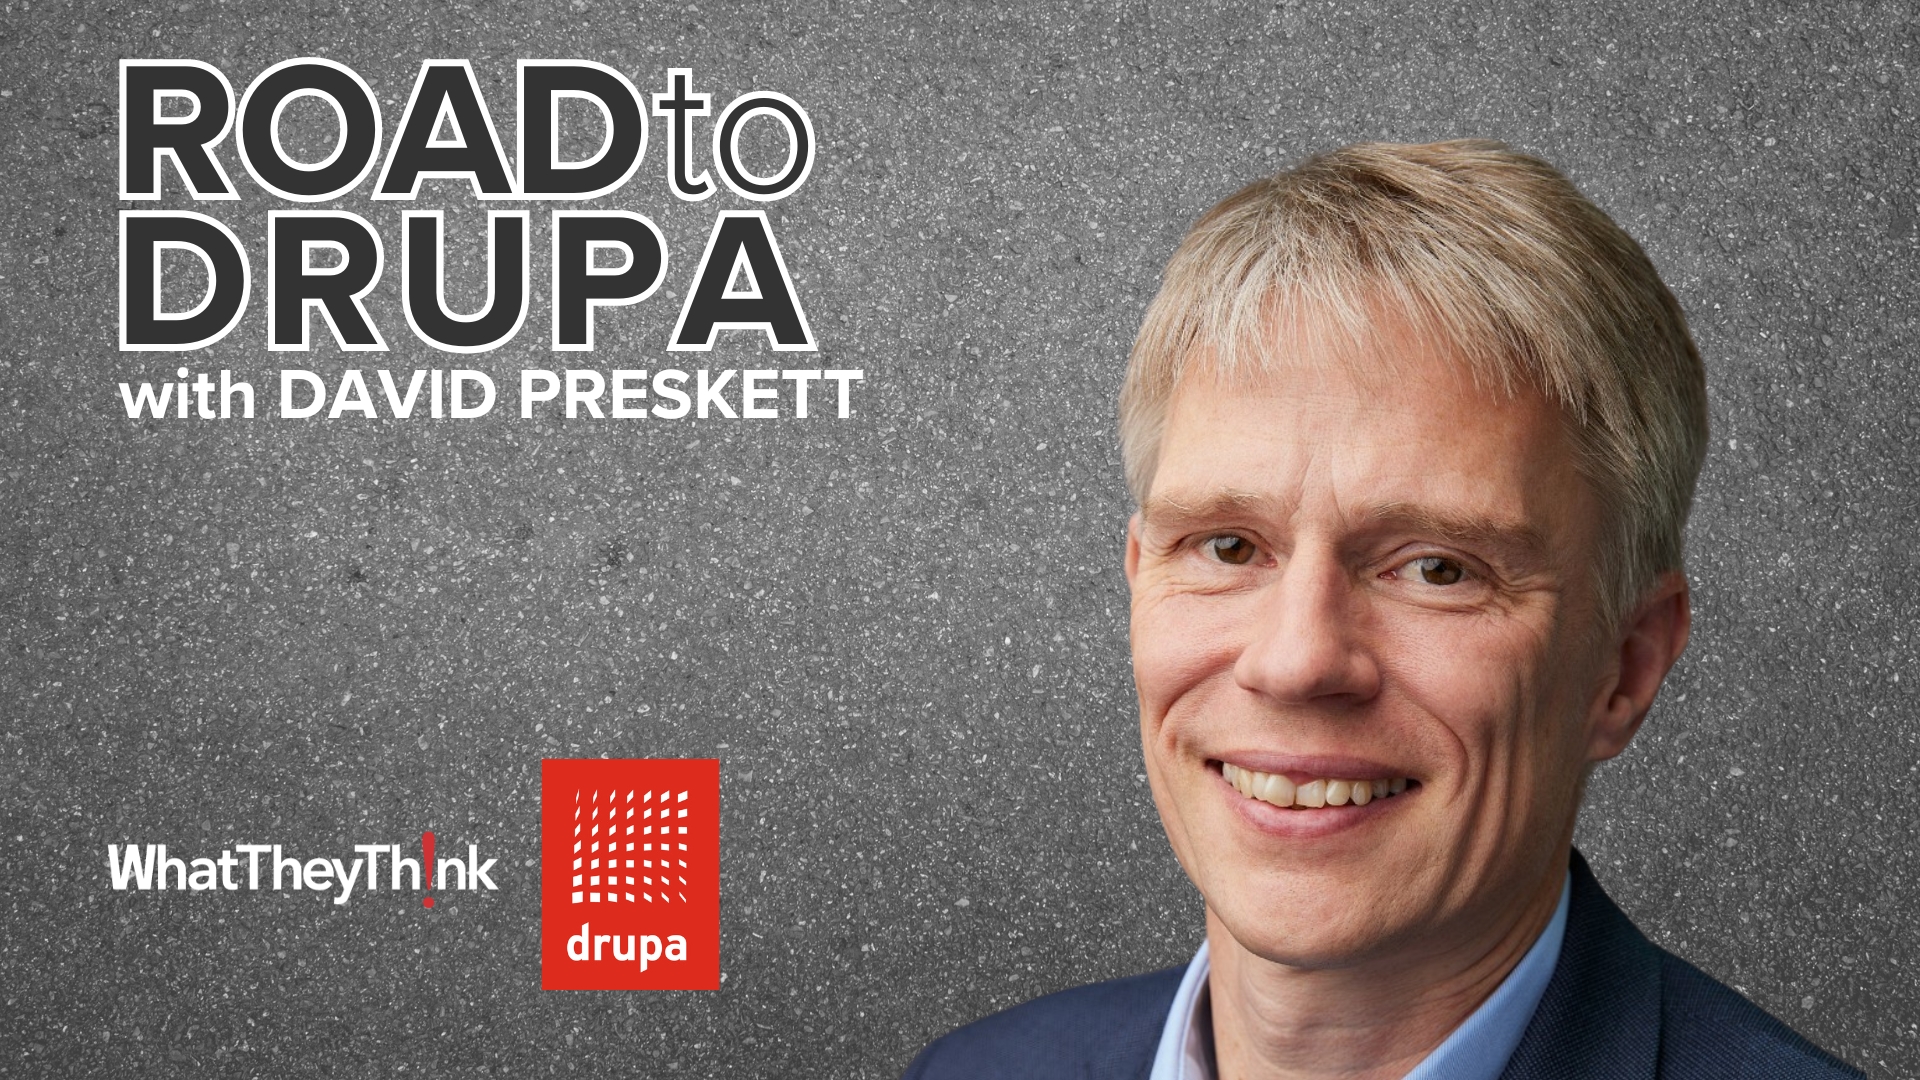 Road to drupa: Kongsberg PCS’s David Preskett